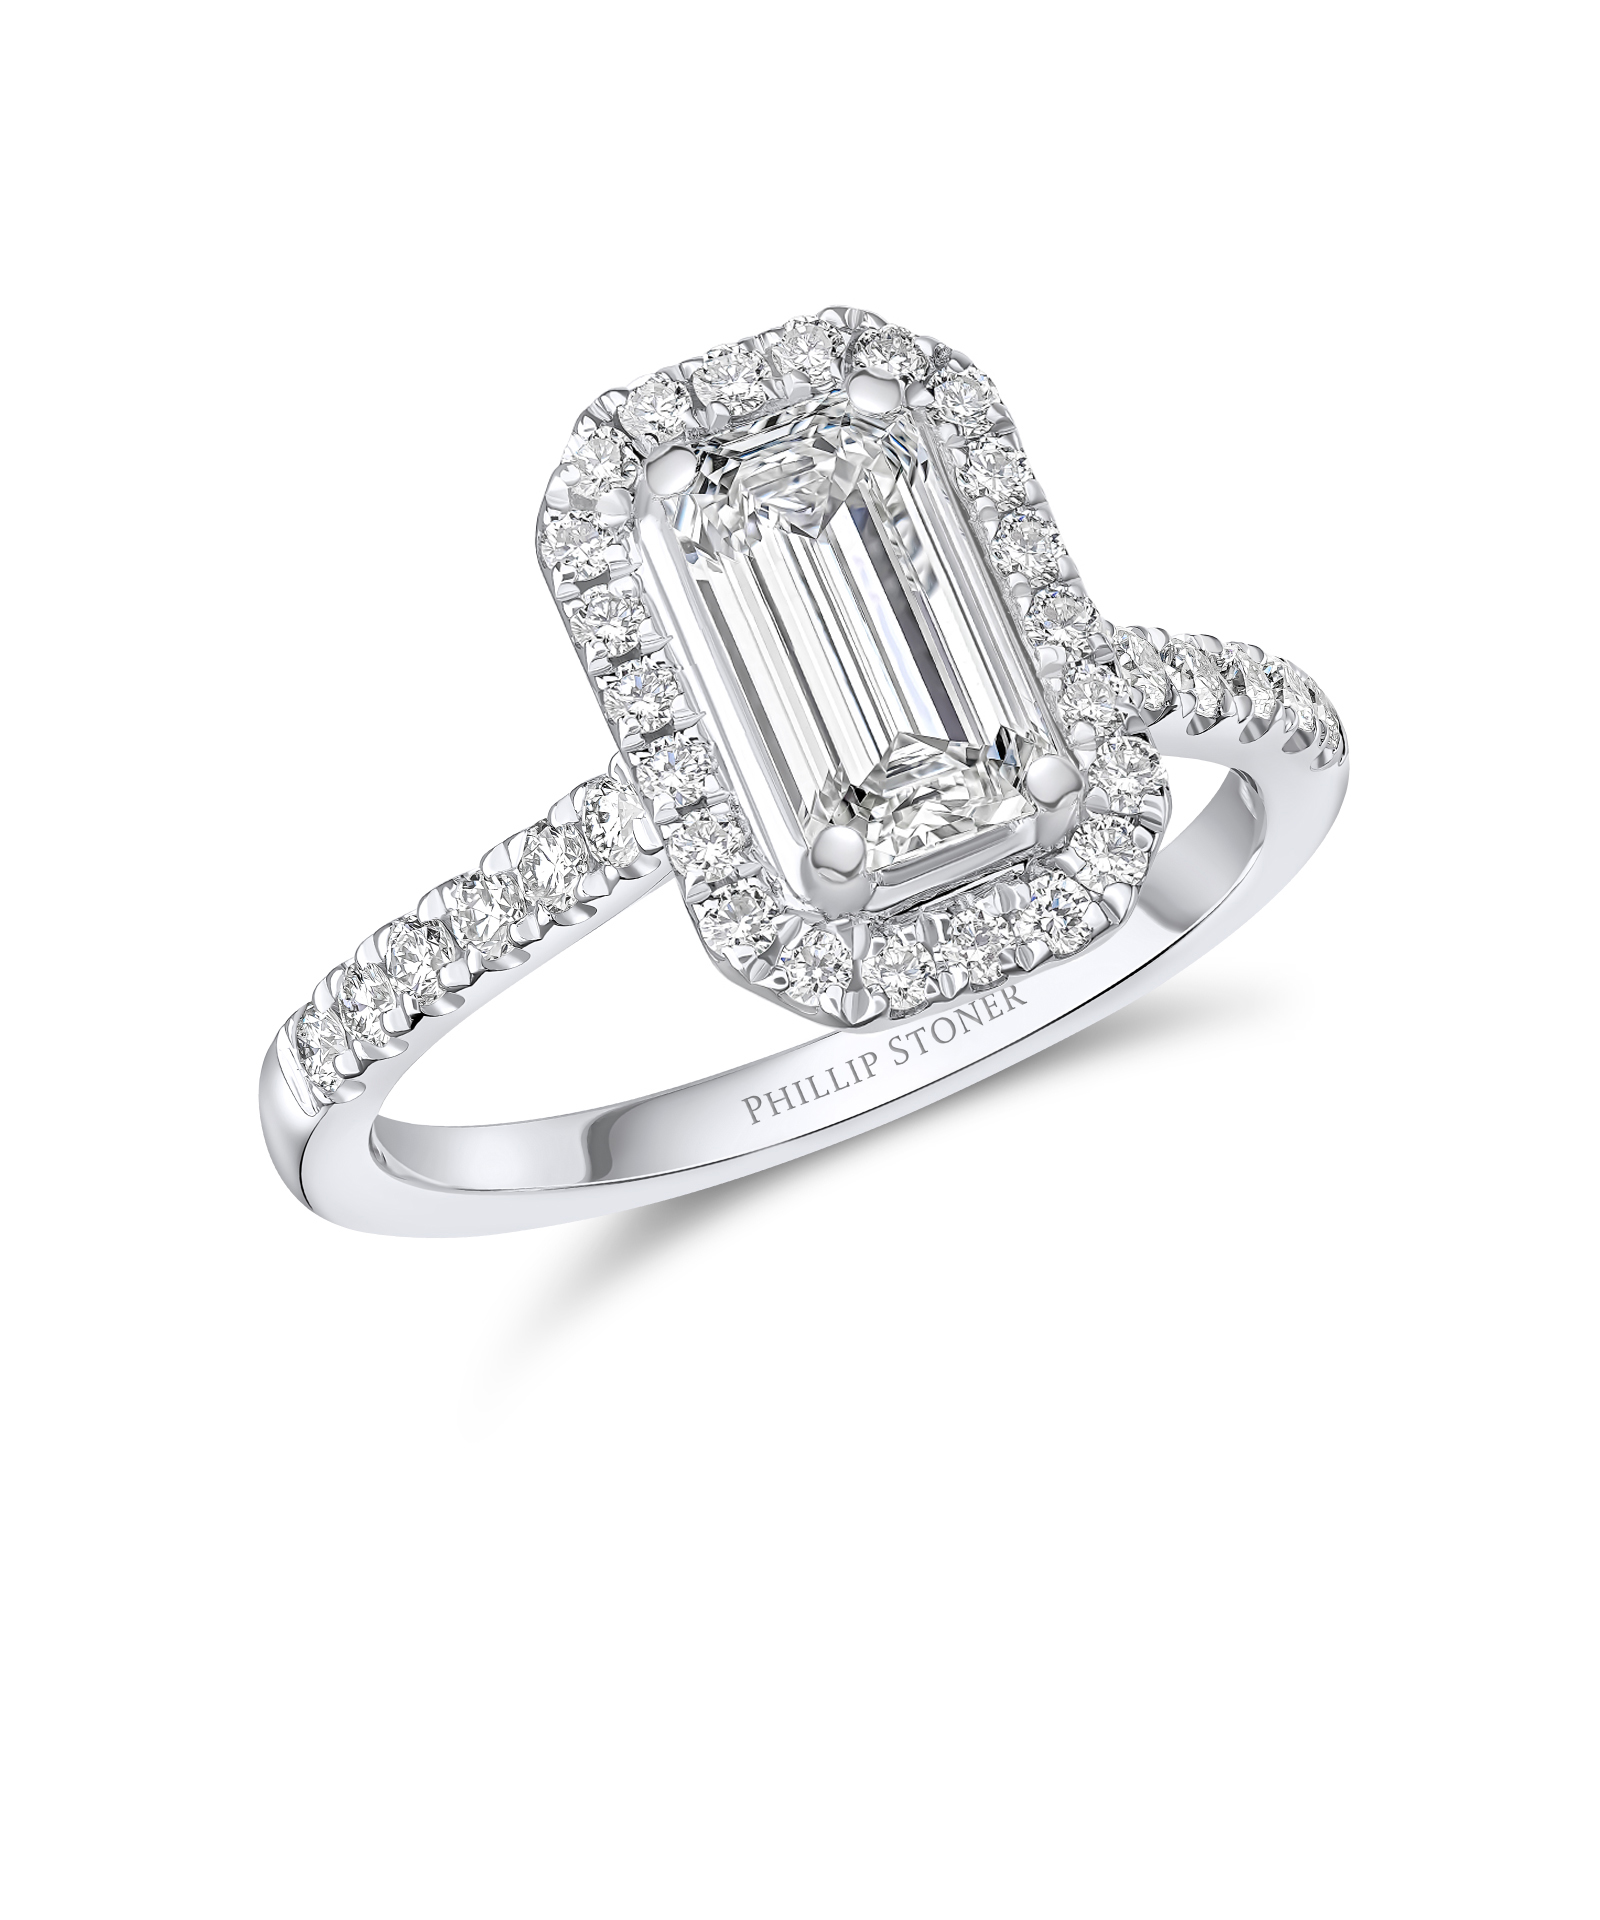 1.5ct Emerald Cut Diamond Cluster Engagement Ring - Phillip Stoner The Jeweller